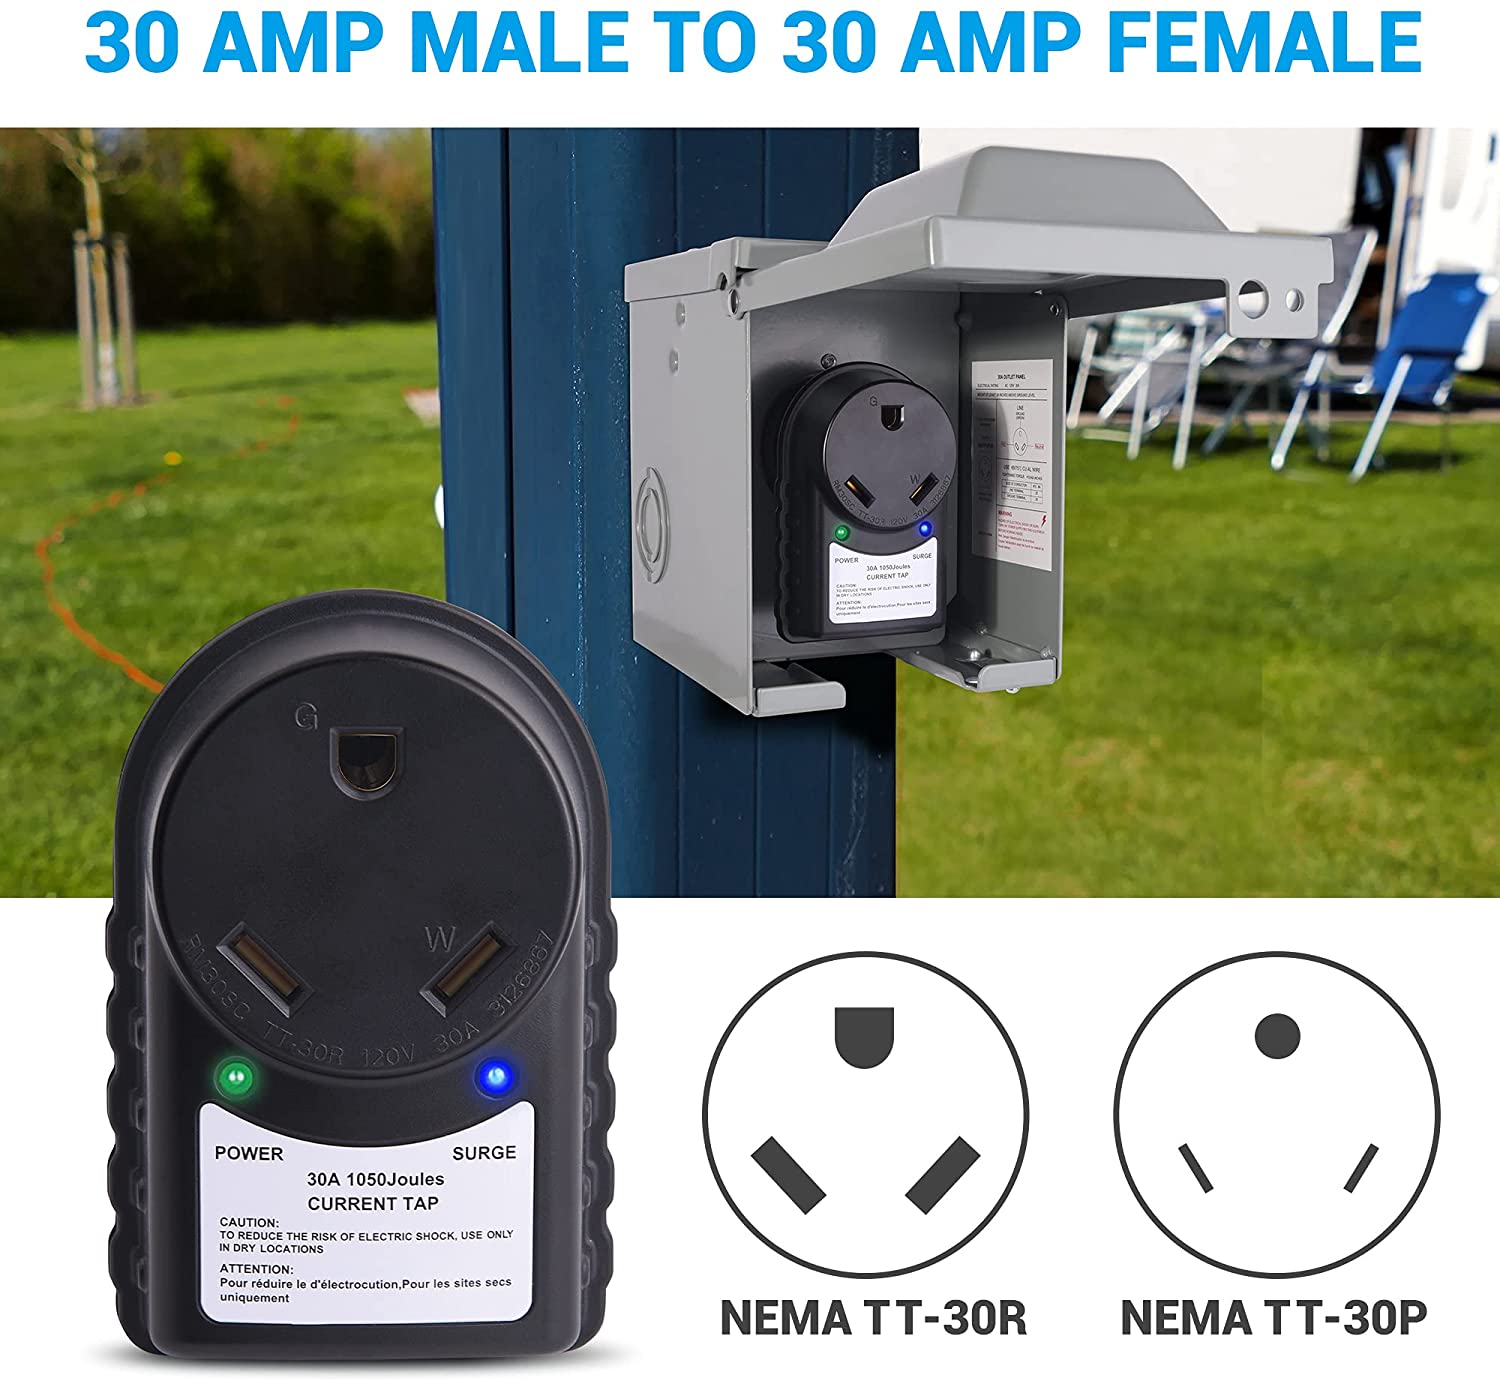 30 Amp RV Surge Protector - 125V, 1050 Joules, LED Indicator Light, ETL Listed, 30 Amp Male to 30 Amp Female for RV Trailer Camper